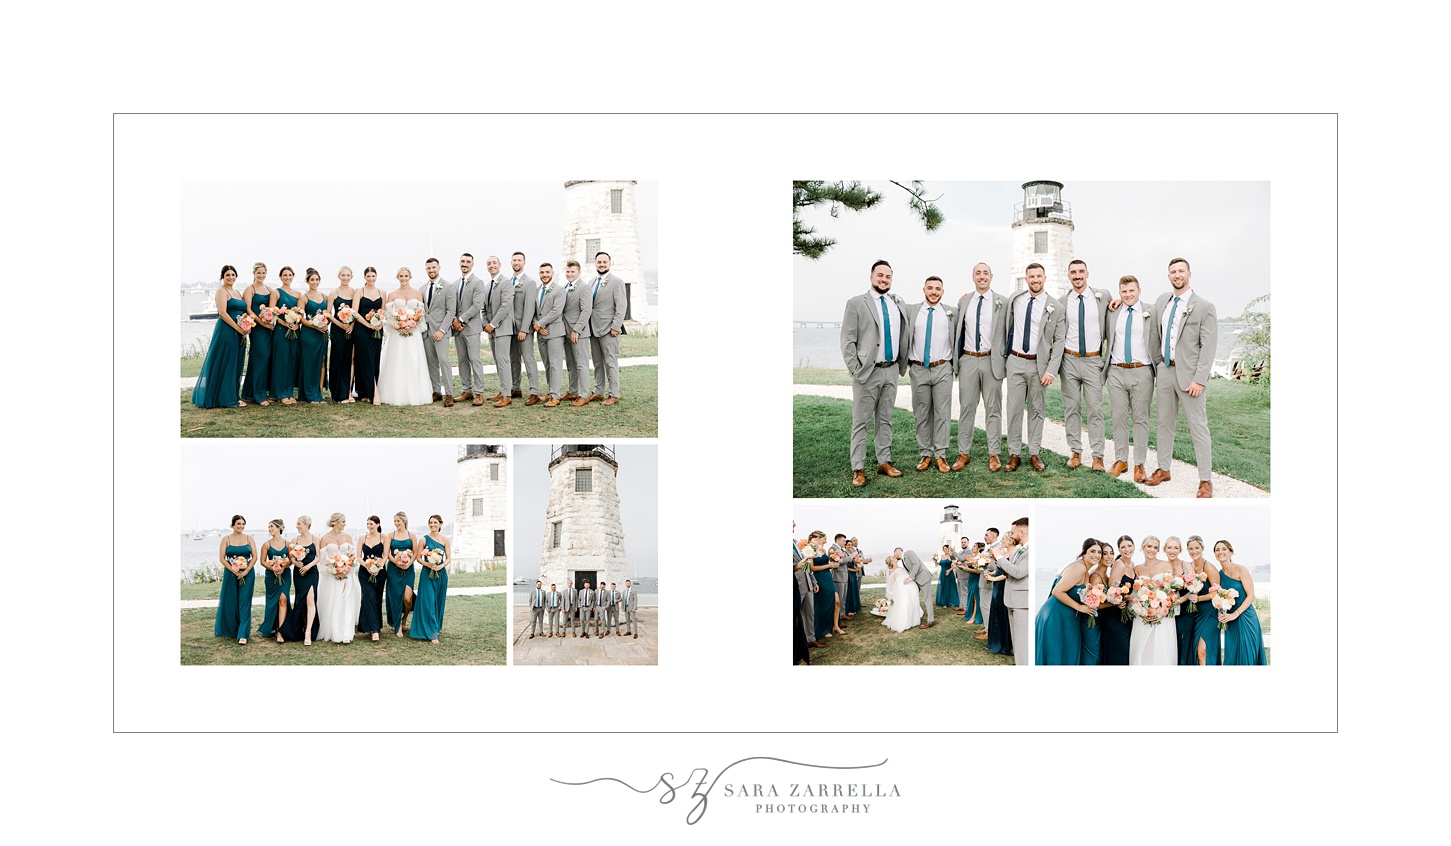 storybook album for autumn Newport Harbor Island Resort wedding designed by Sara Zarrella Photography